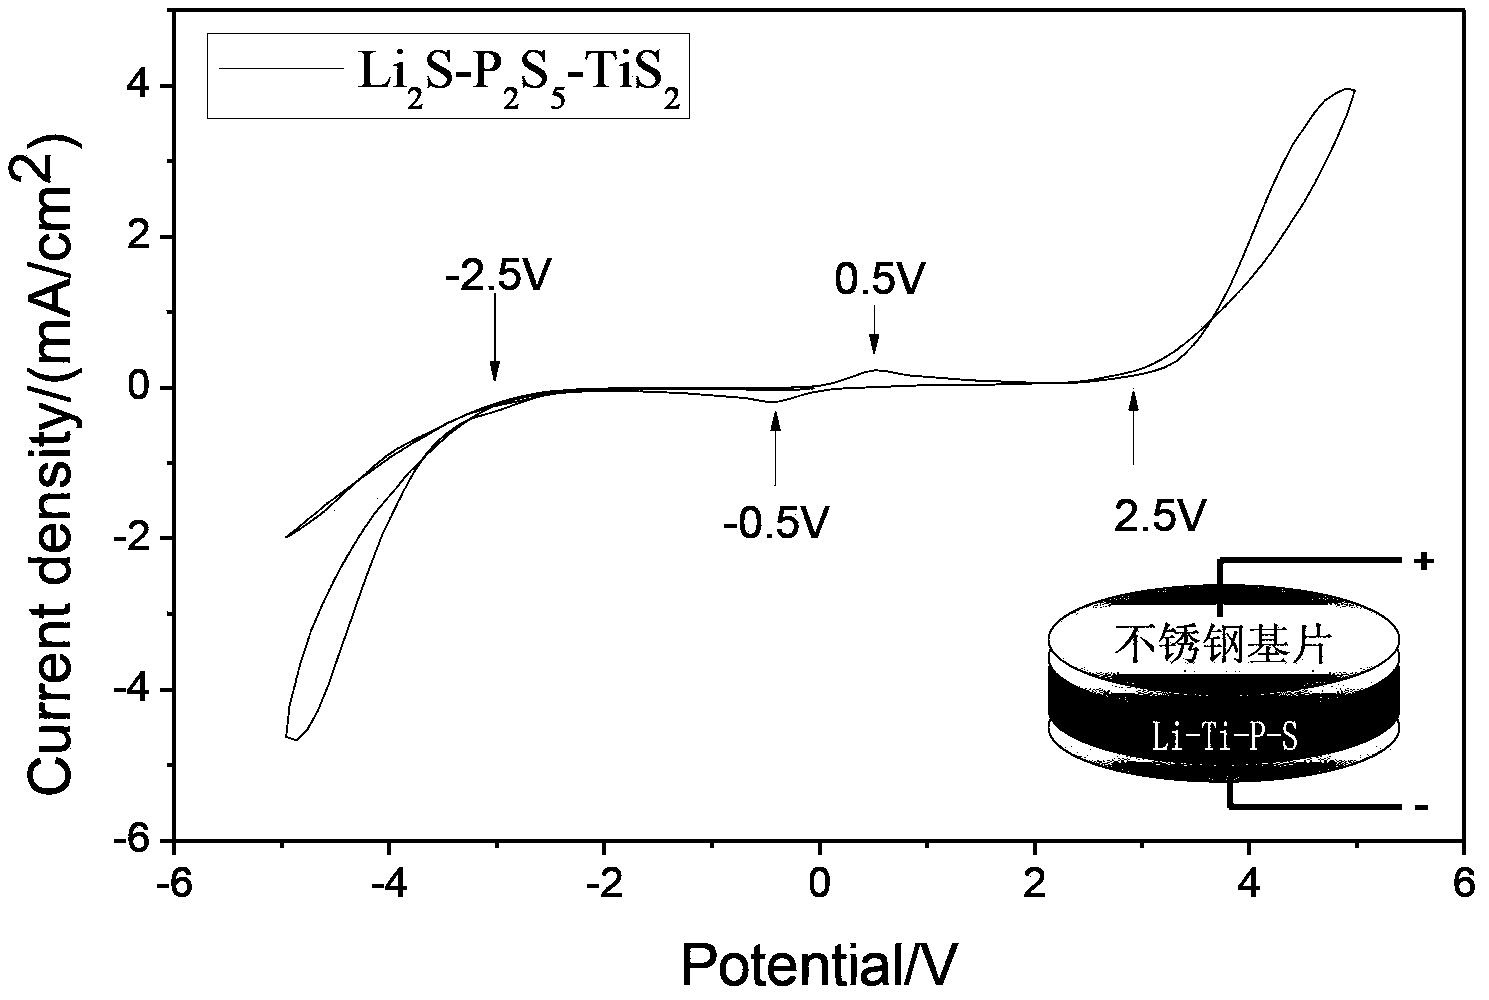 Li2S-P2S5-TiS2 amorphous electrolyte material